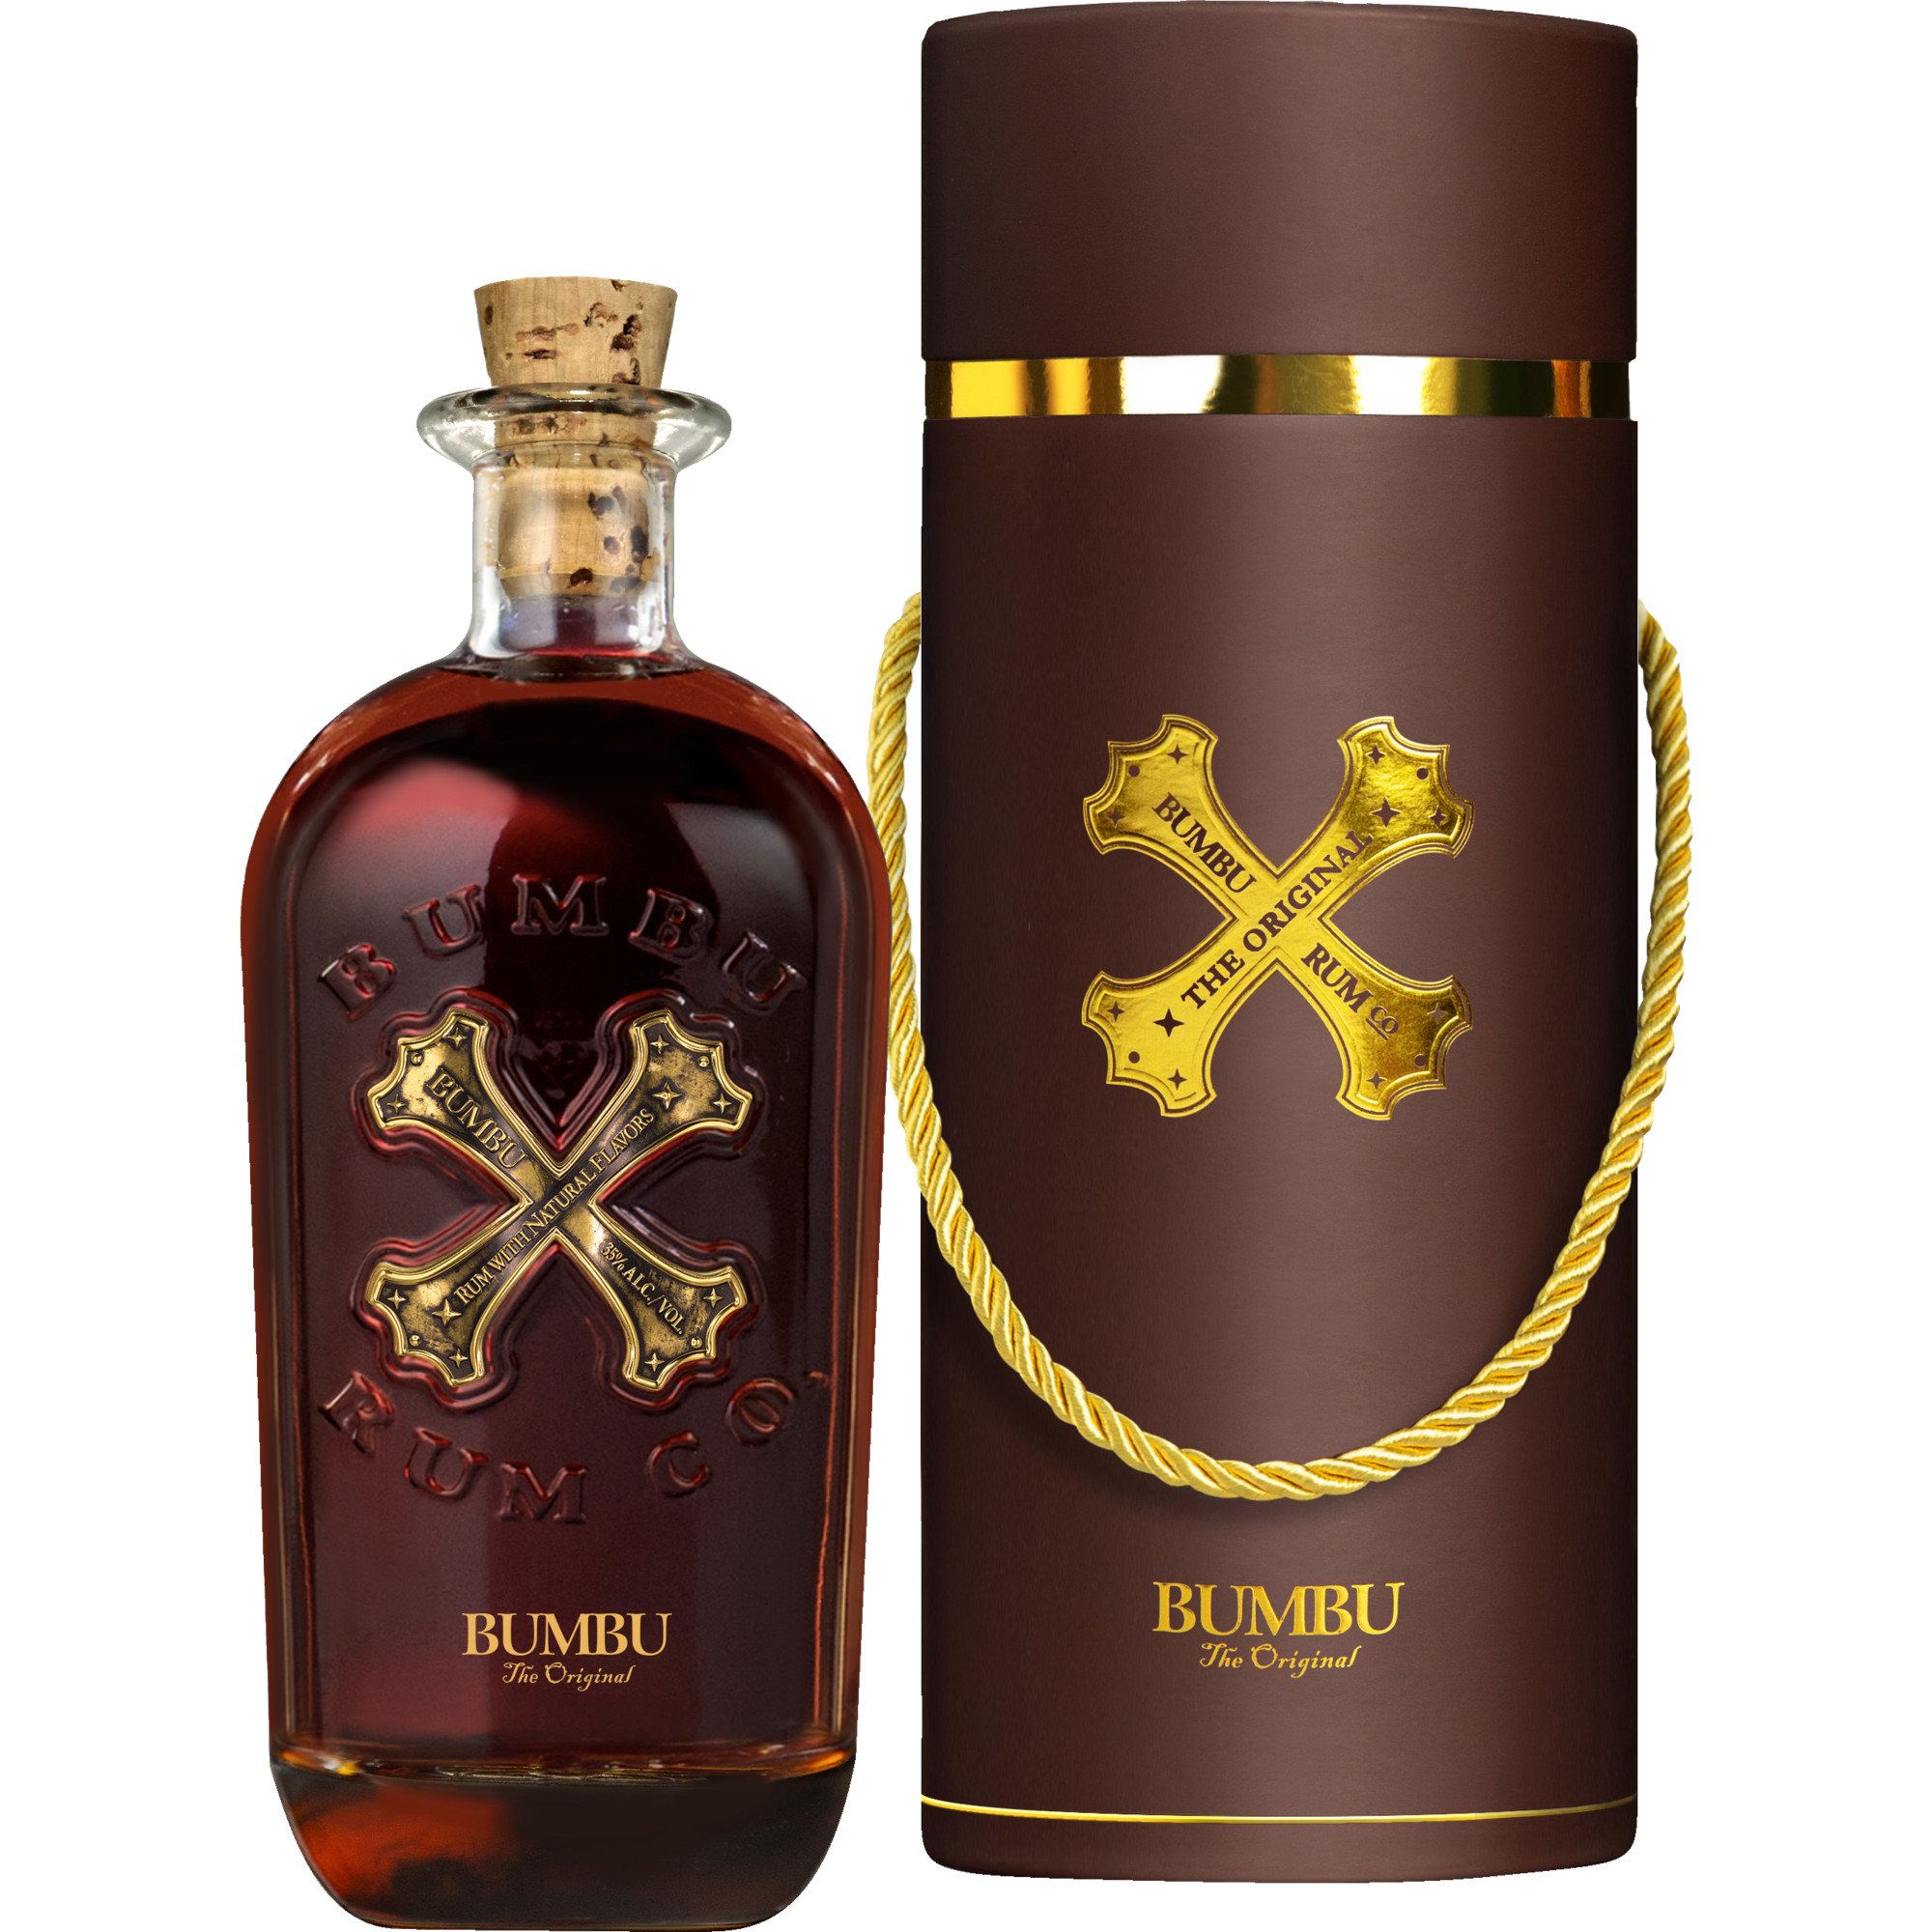 Bumbu Orignal Rum, Barbados, 0,7 L, 40% Vol. in Etui, Spirituosen  Spirituosen Hawesko